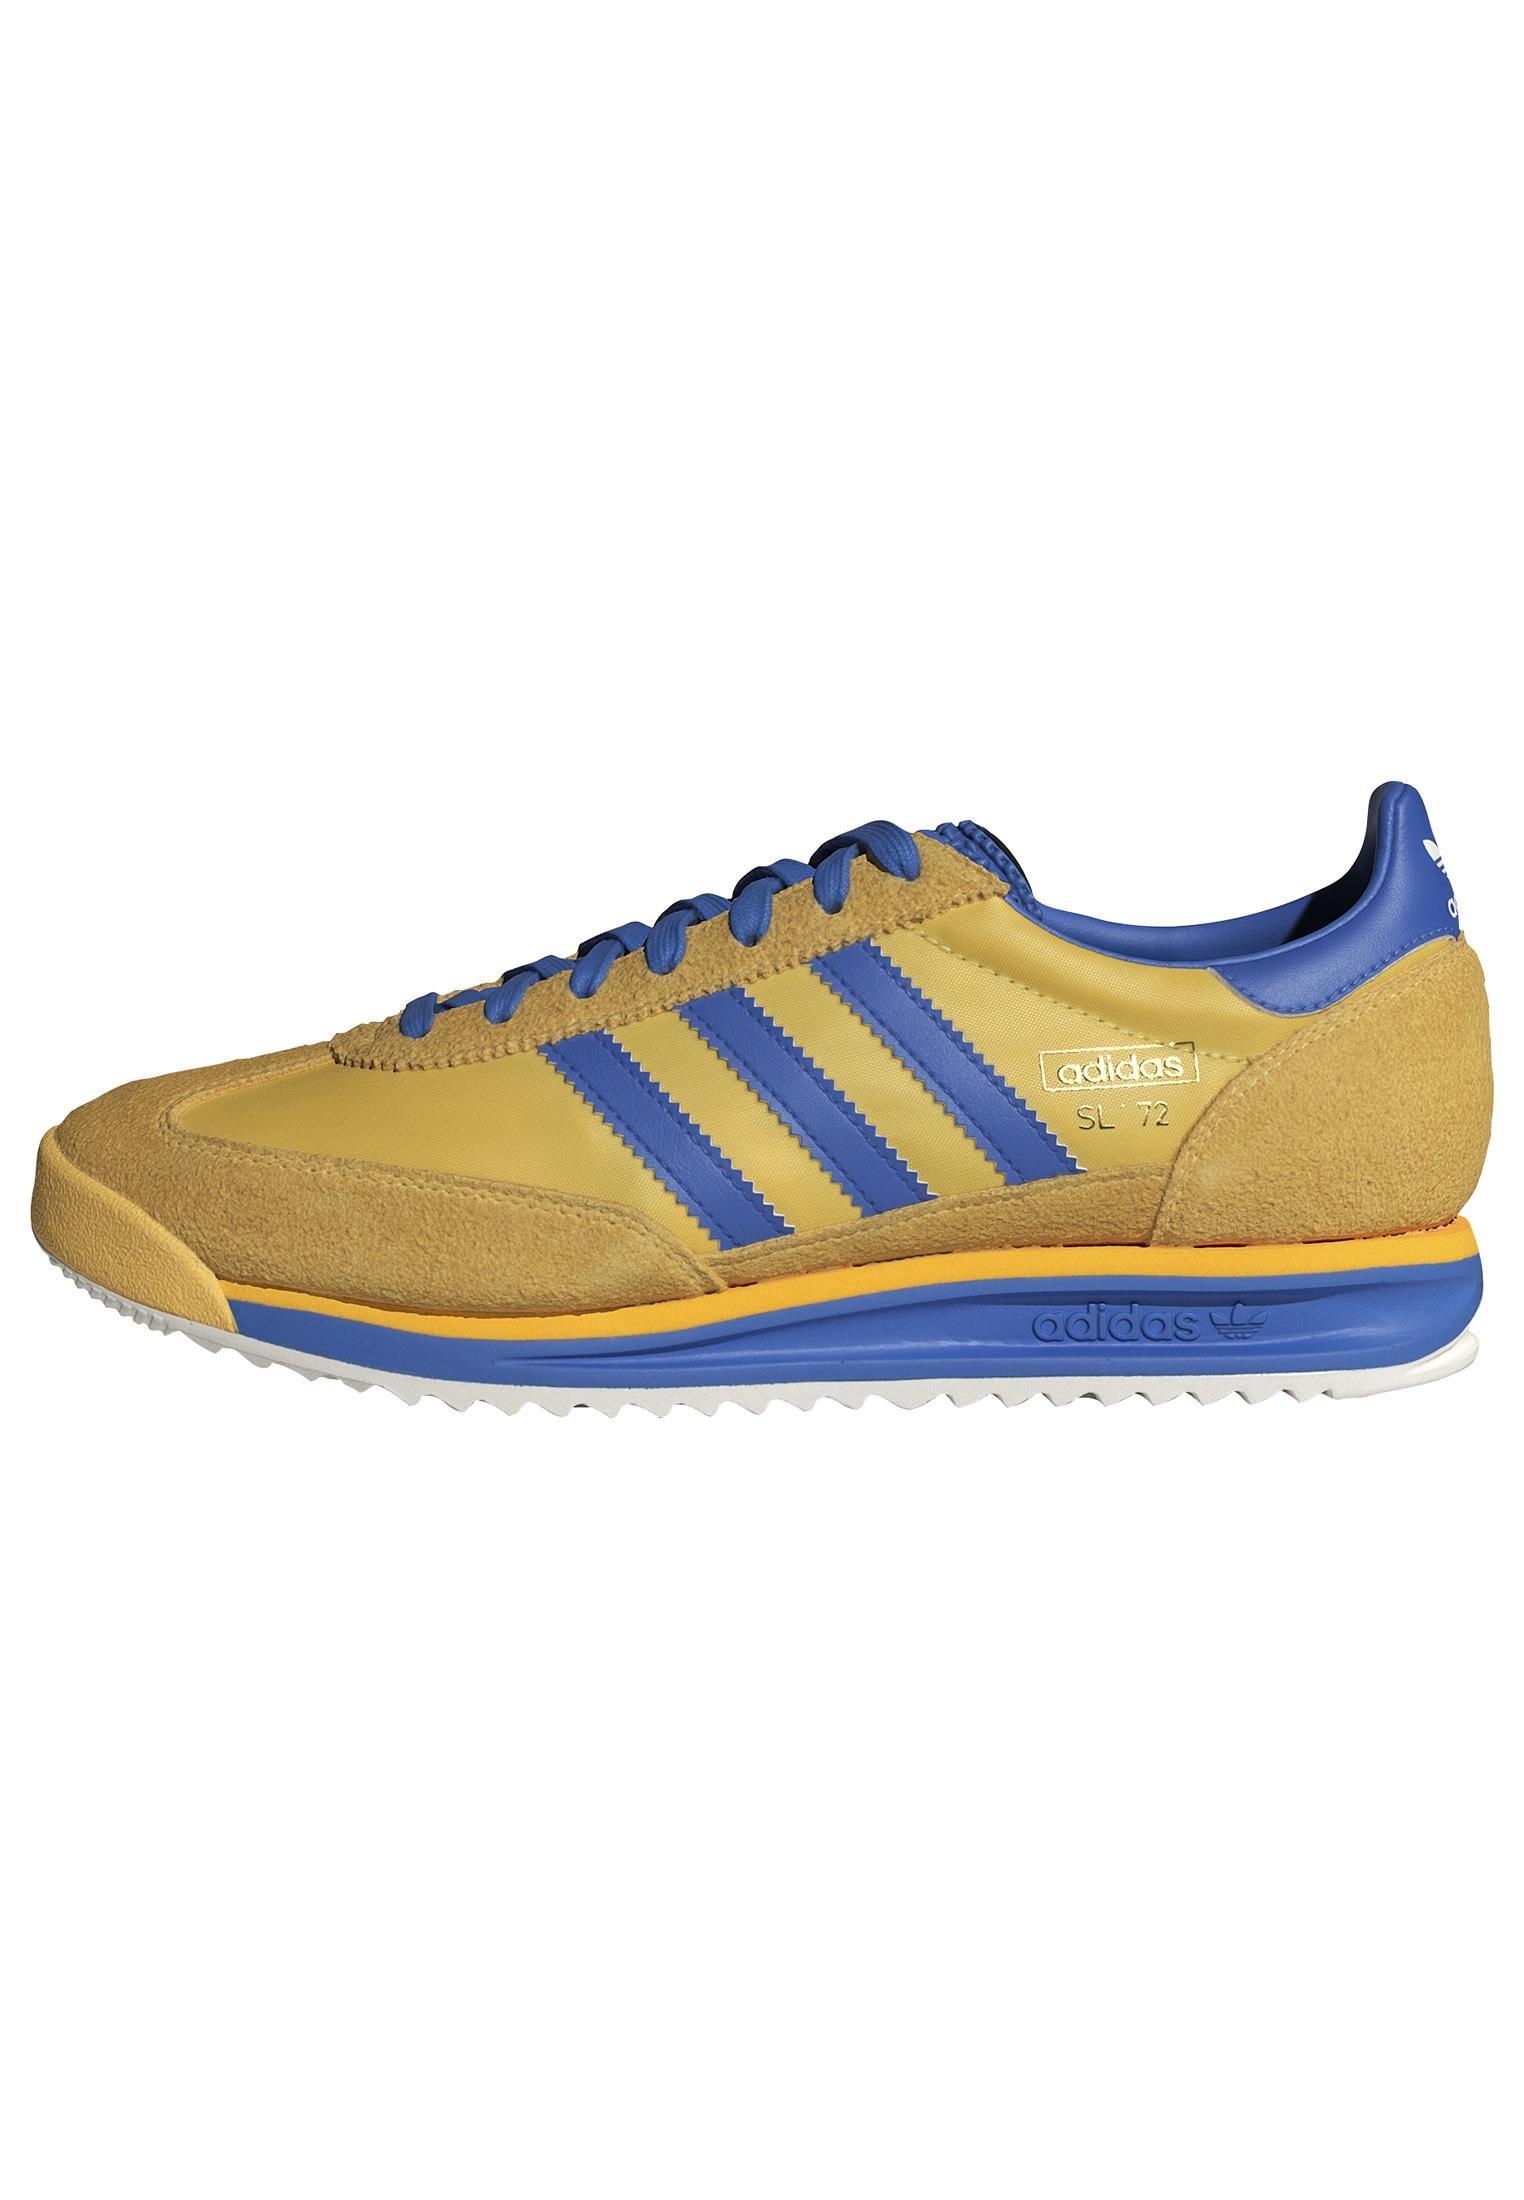 adidas - Men Sl 72 Rs Shoes, Yellow